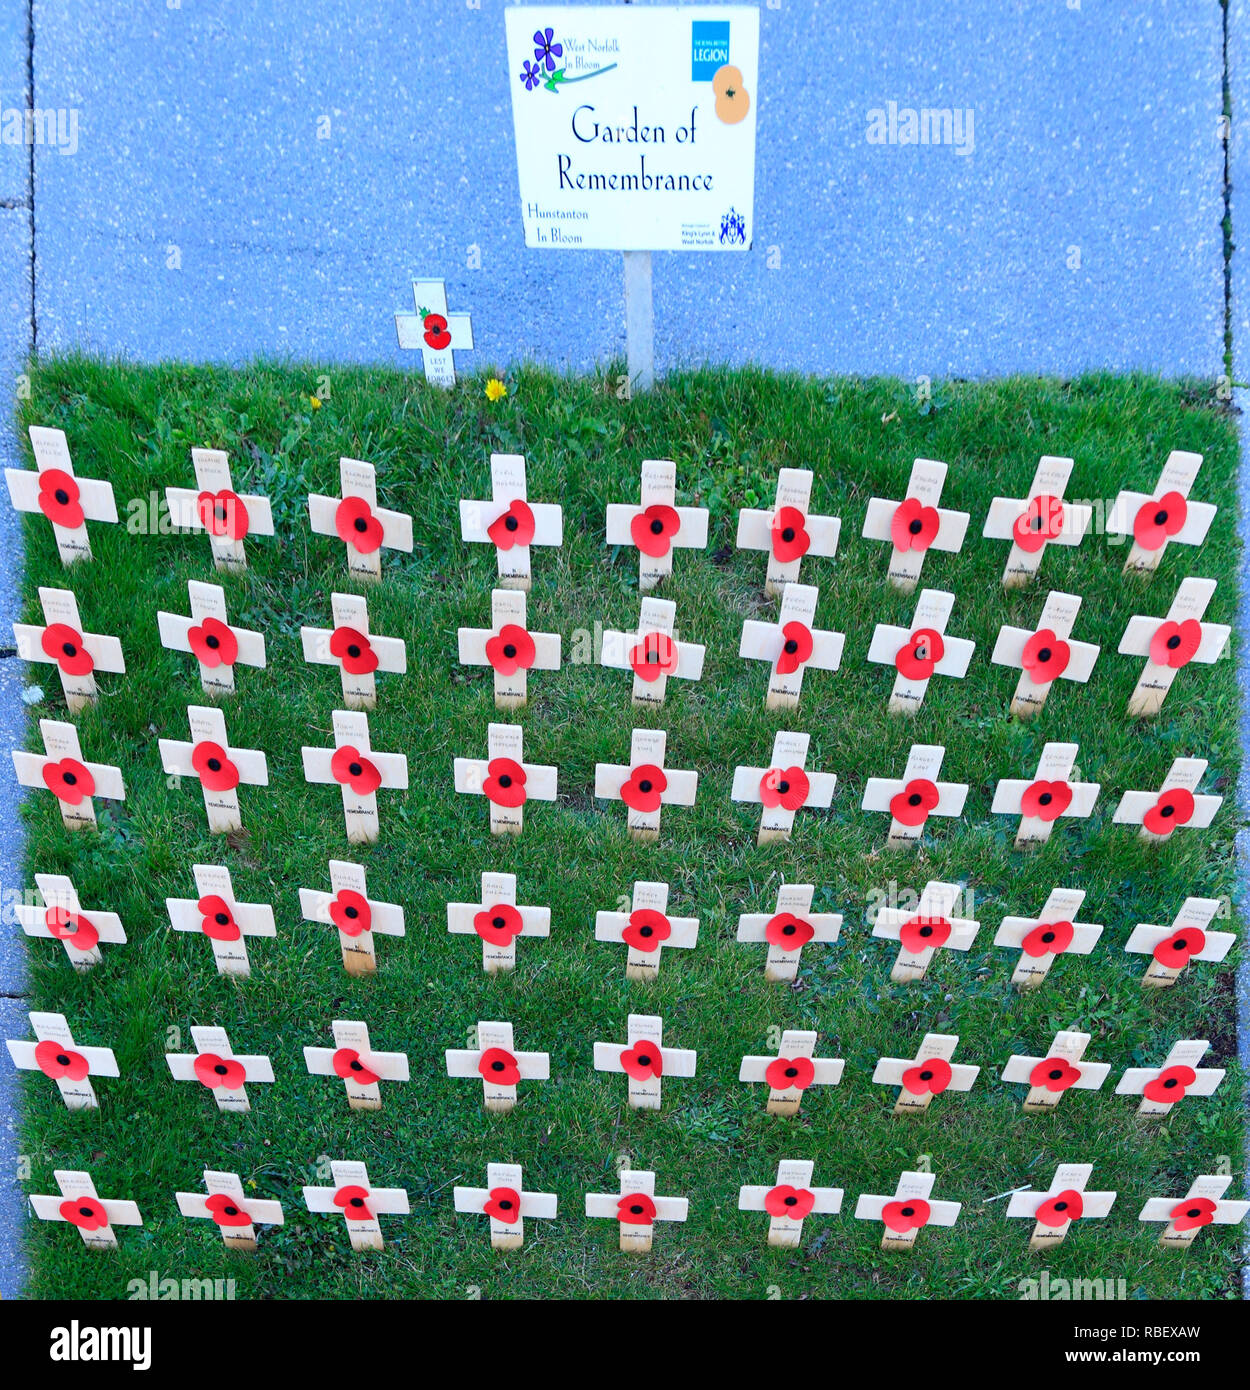 Garden of Remembrance, British Legion, red poppies, crosses, Hunstanton, Norfolk, UK Stock Photo